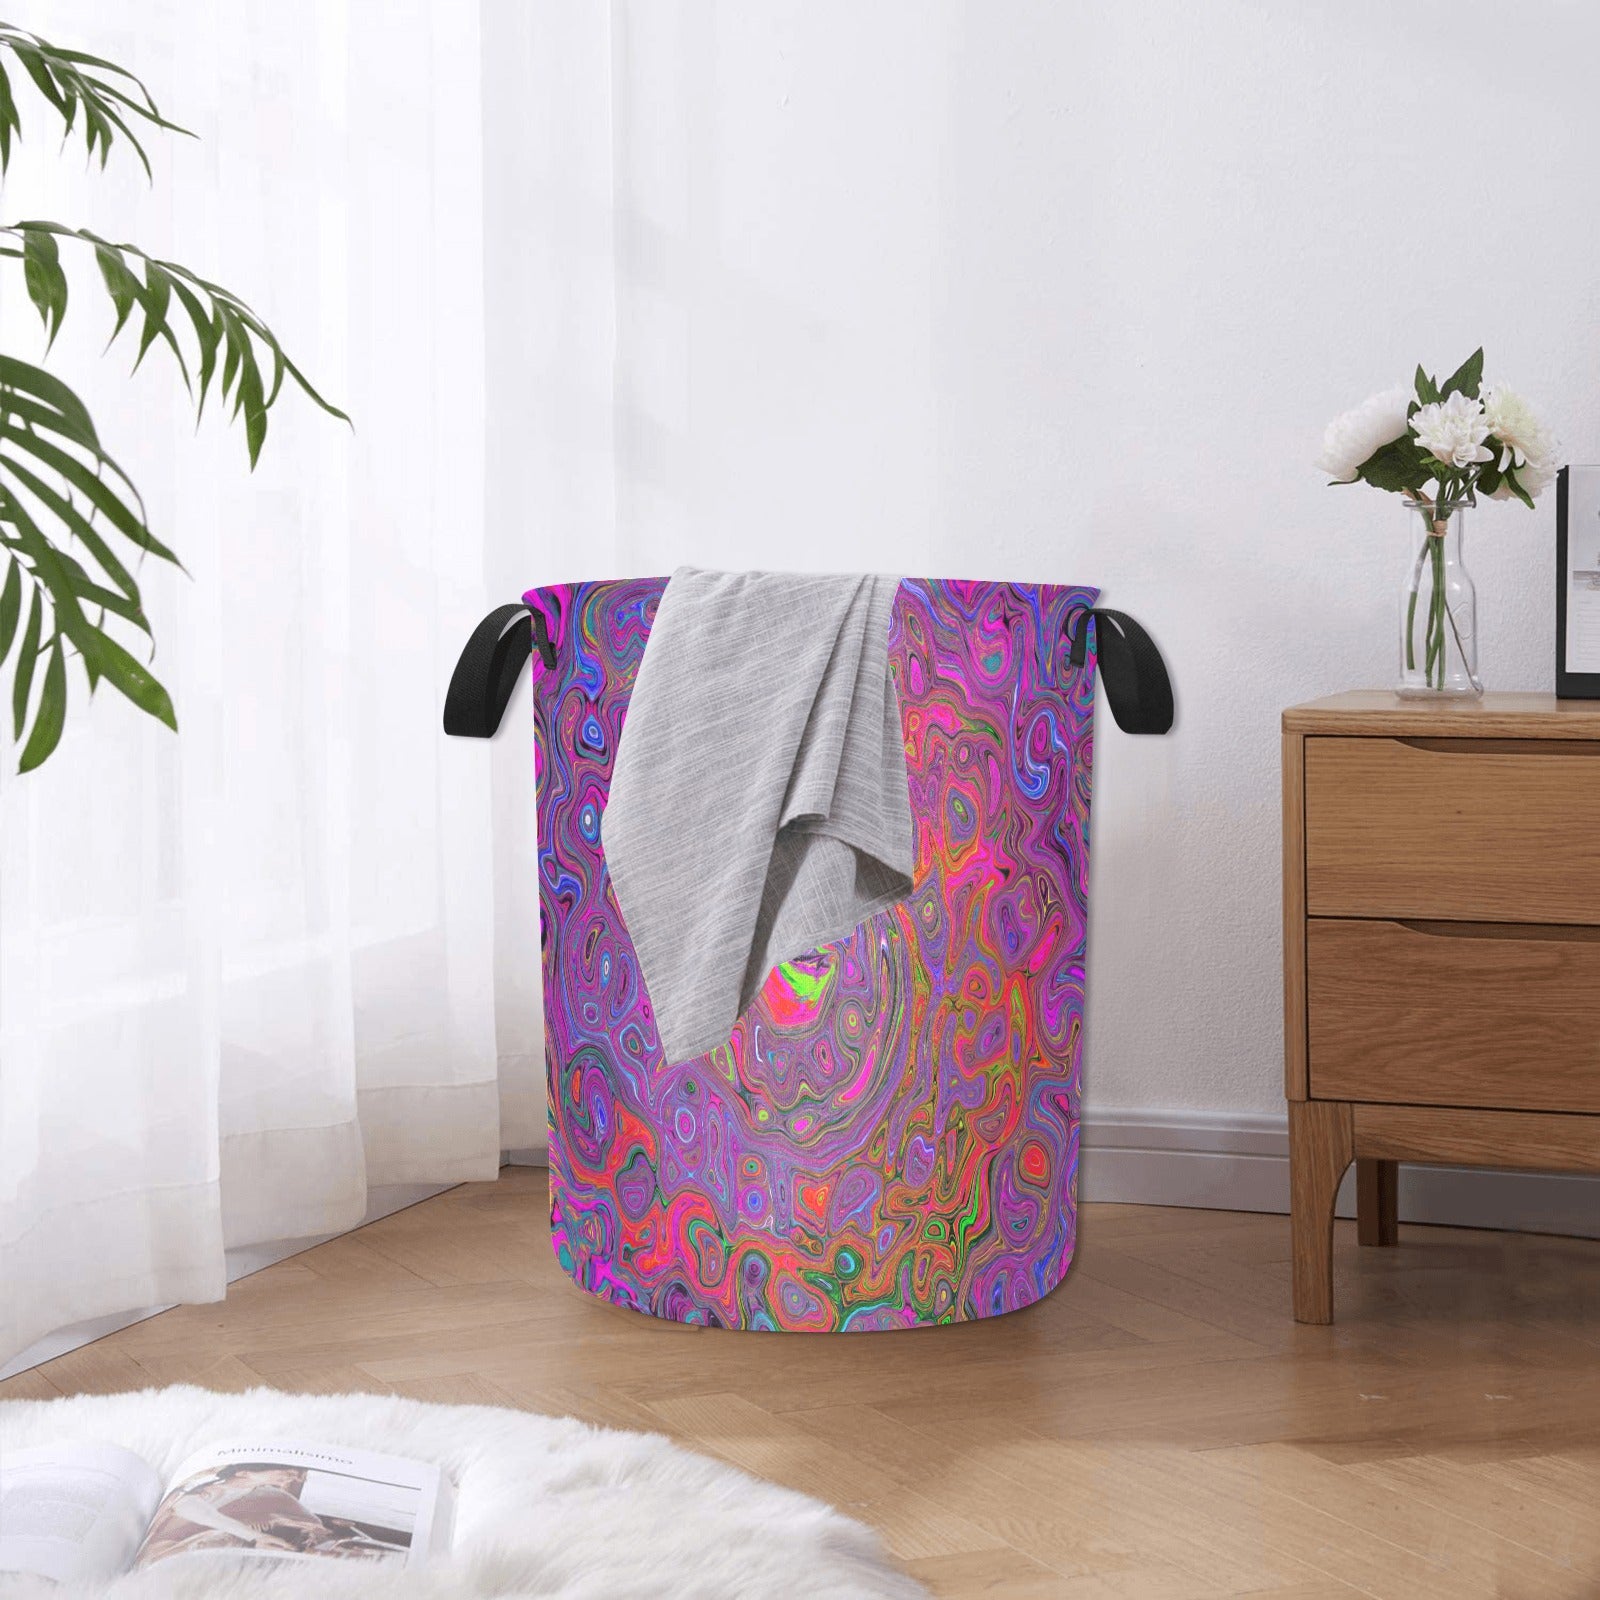 Fabric Laundry Basket with Handles, Psychedelic Groovy Magenta Retro Liquid Swirl